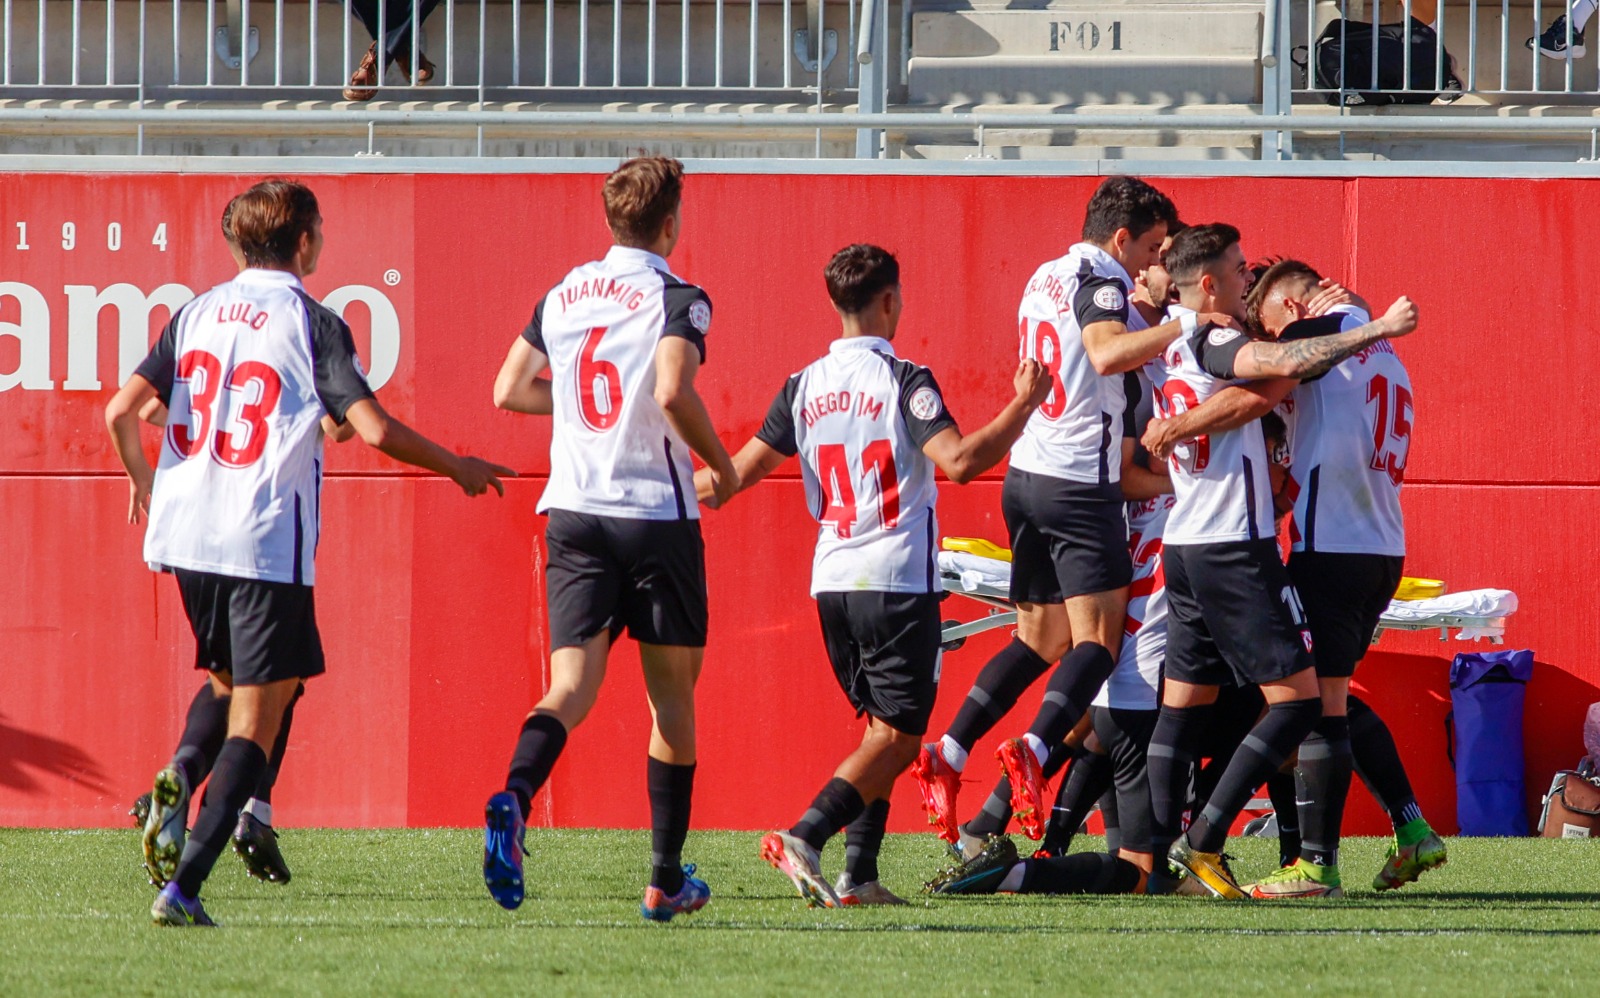 The Sevilla Atlético boys celebrate a goal